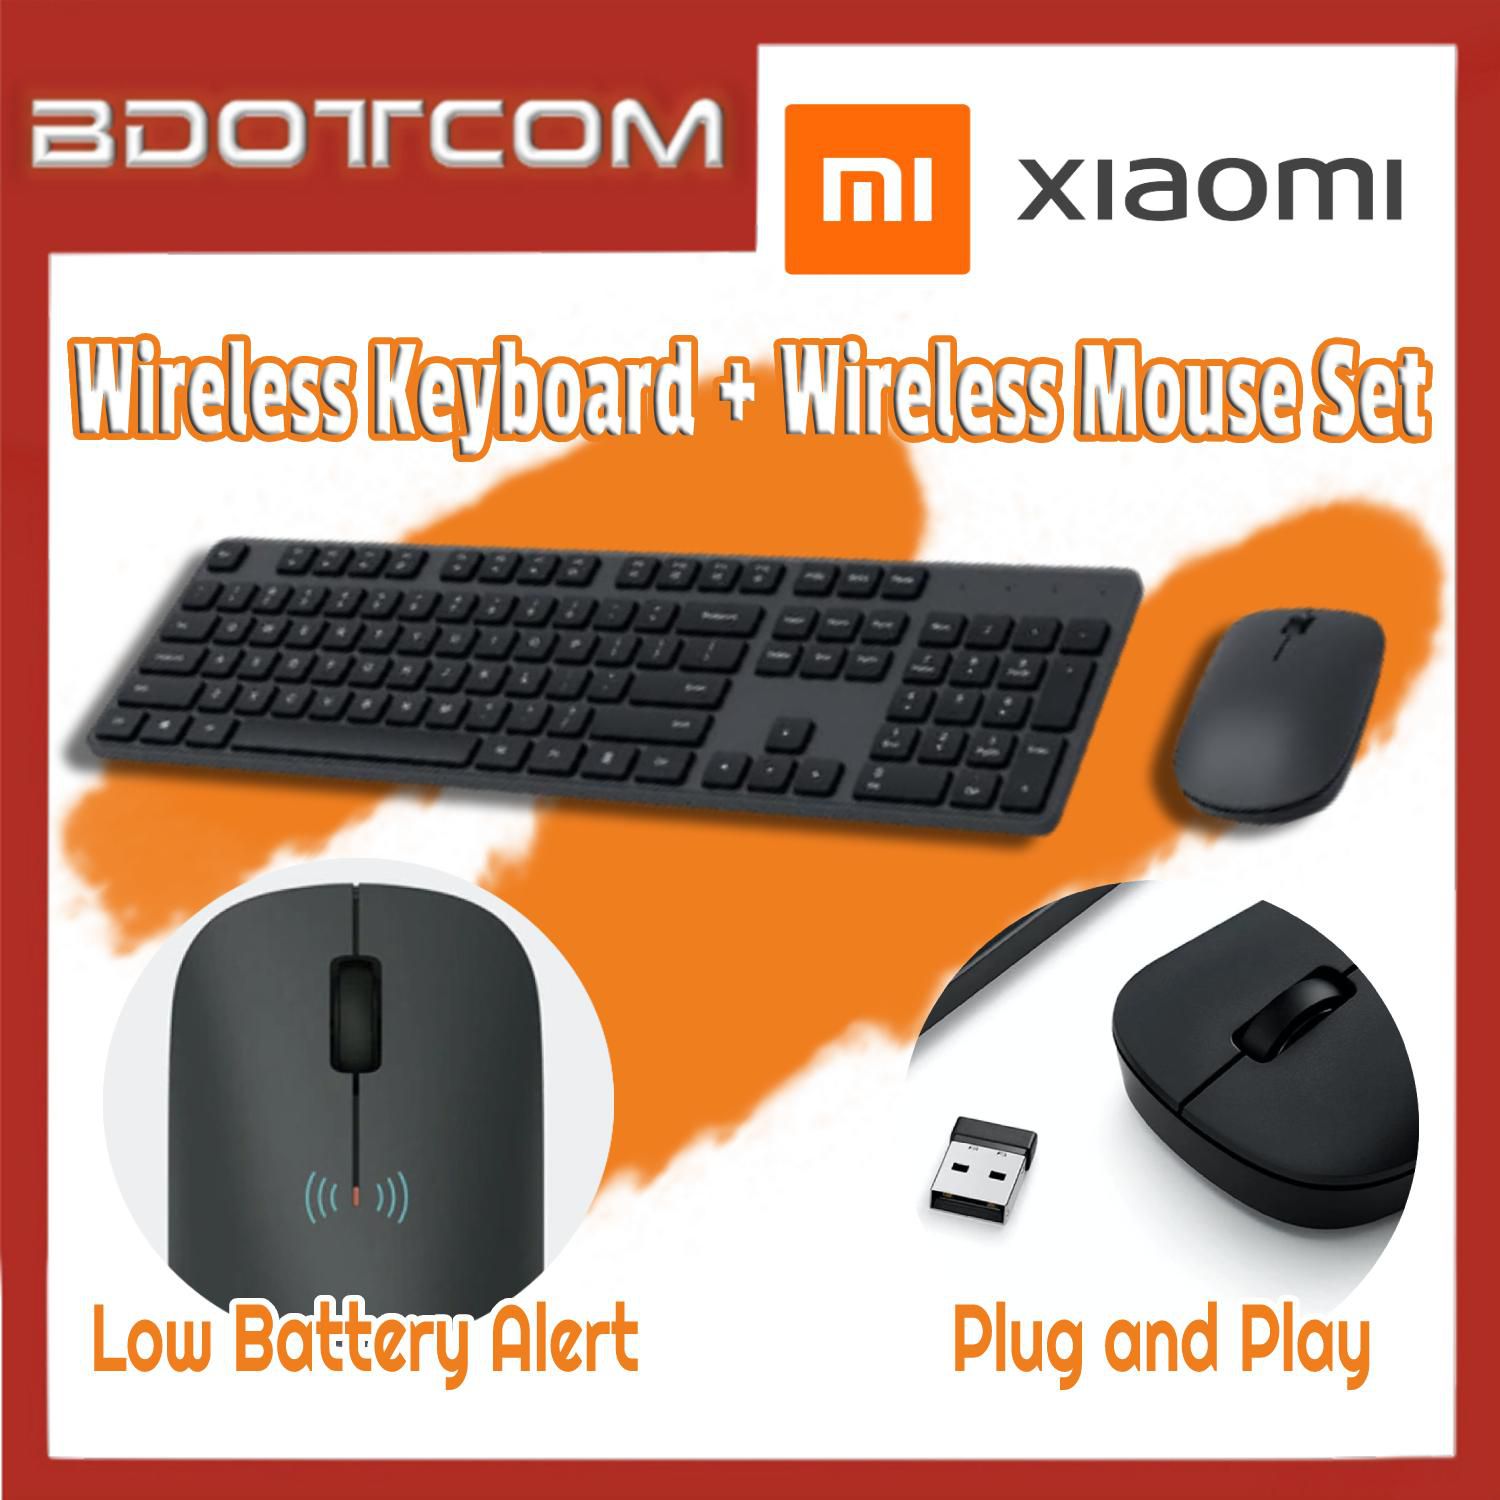 Xiaomi [Ready Stock] 2.4G Wireless 104-Key Keyboard + Wireless Mouse Set